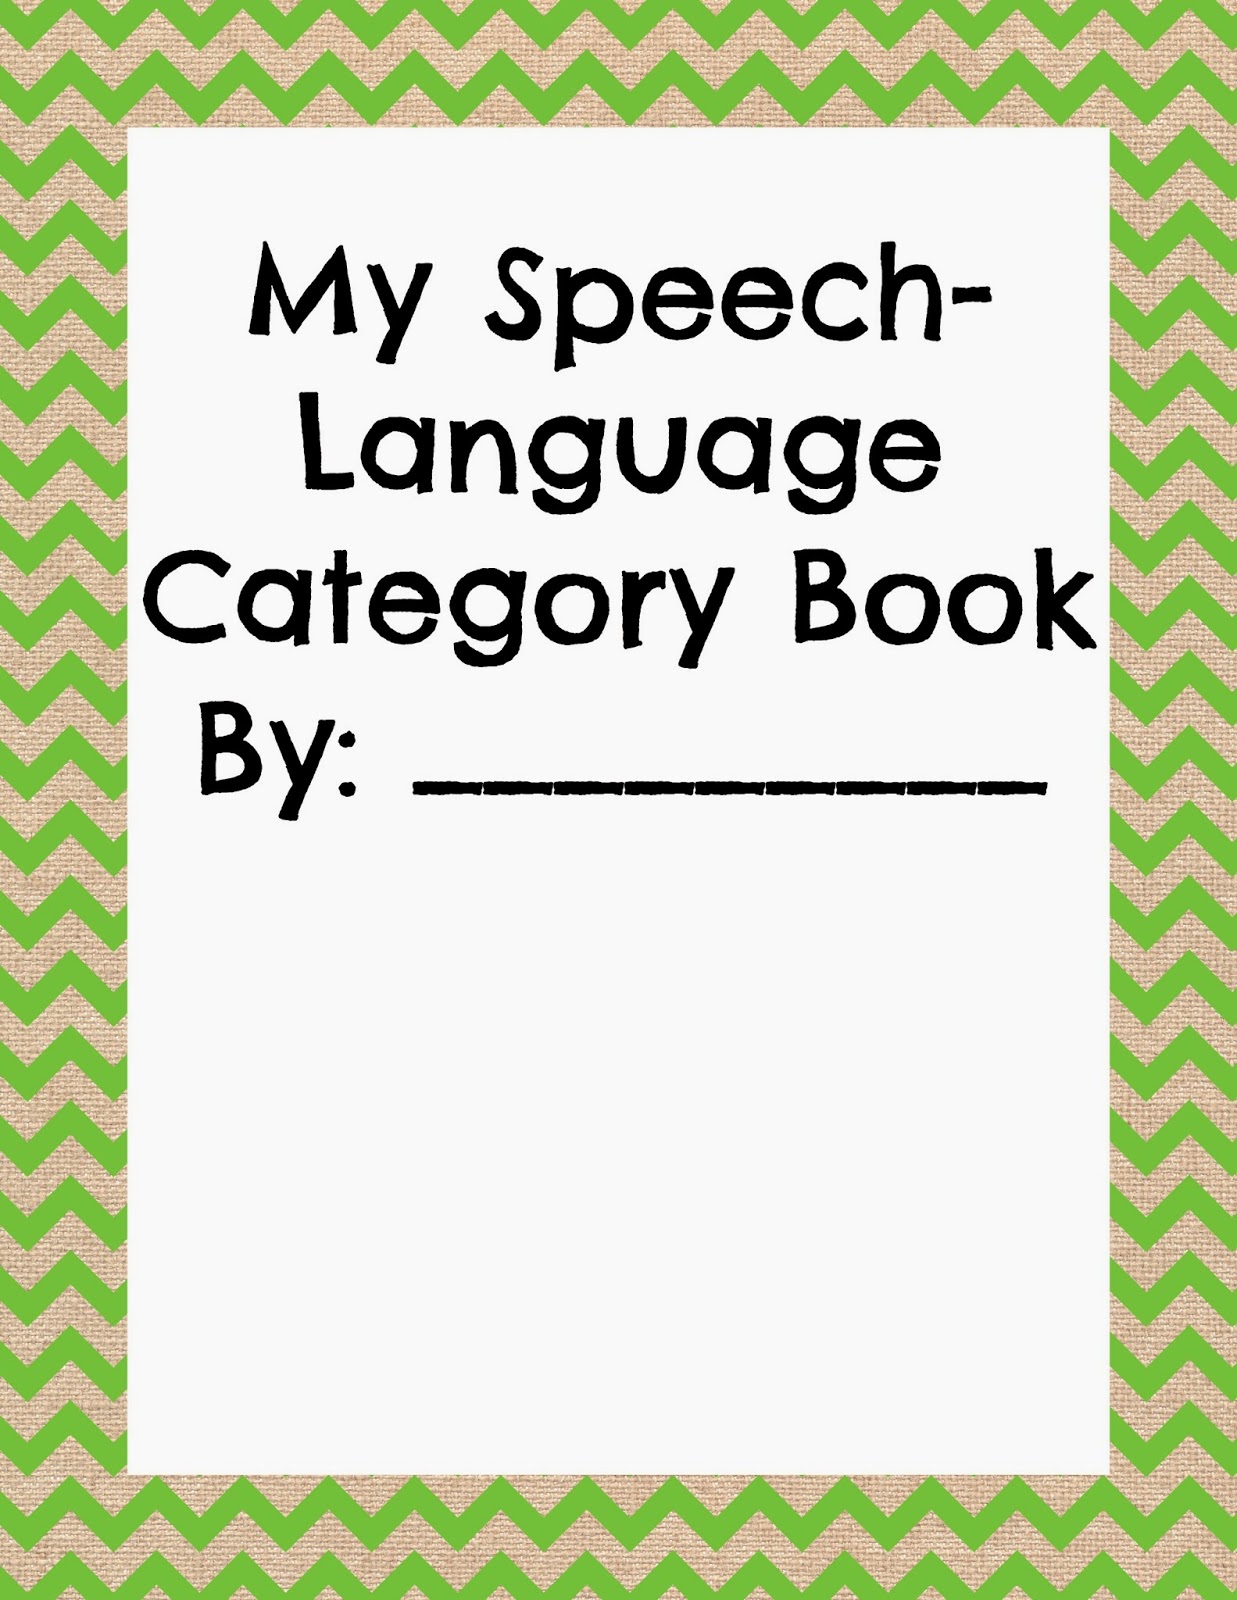 Categorization Bundle Activity # 5: Speech-Language and Language Arts Category Book